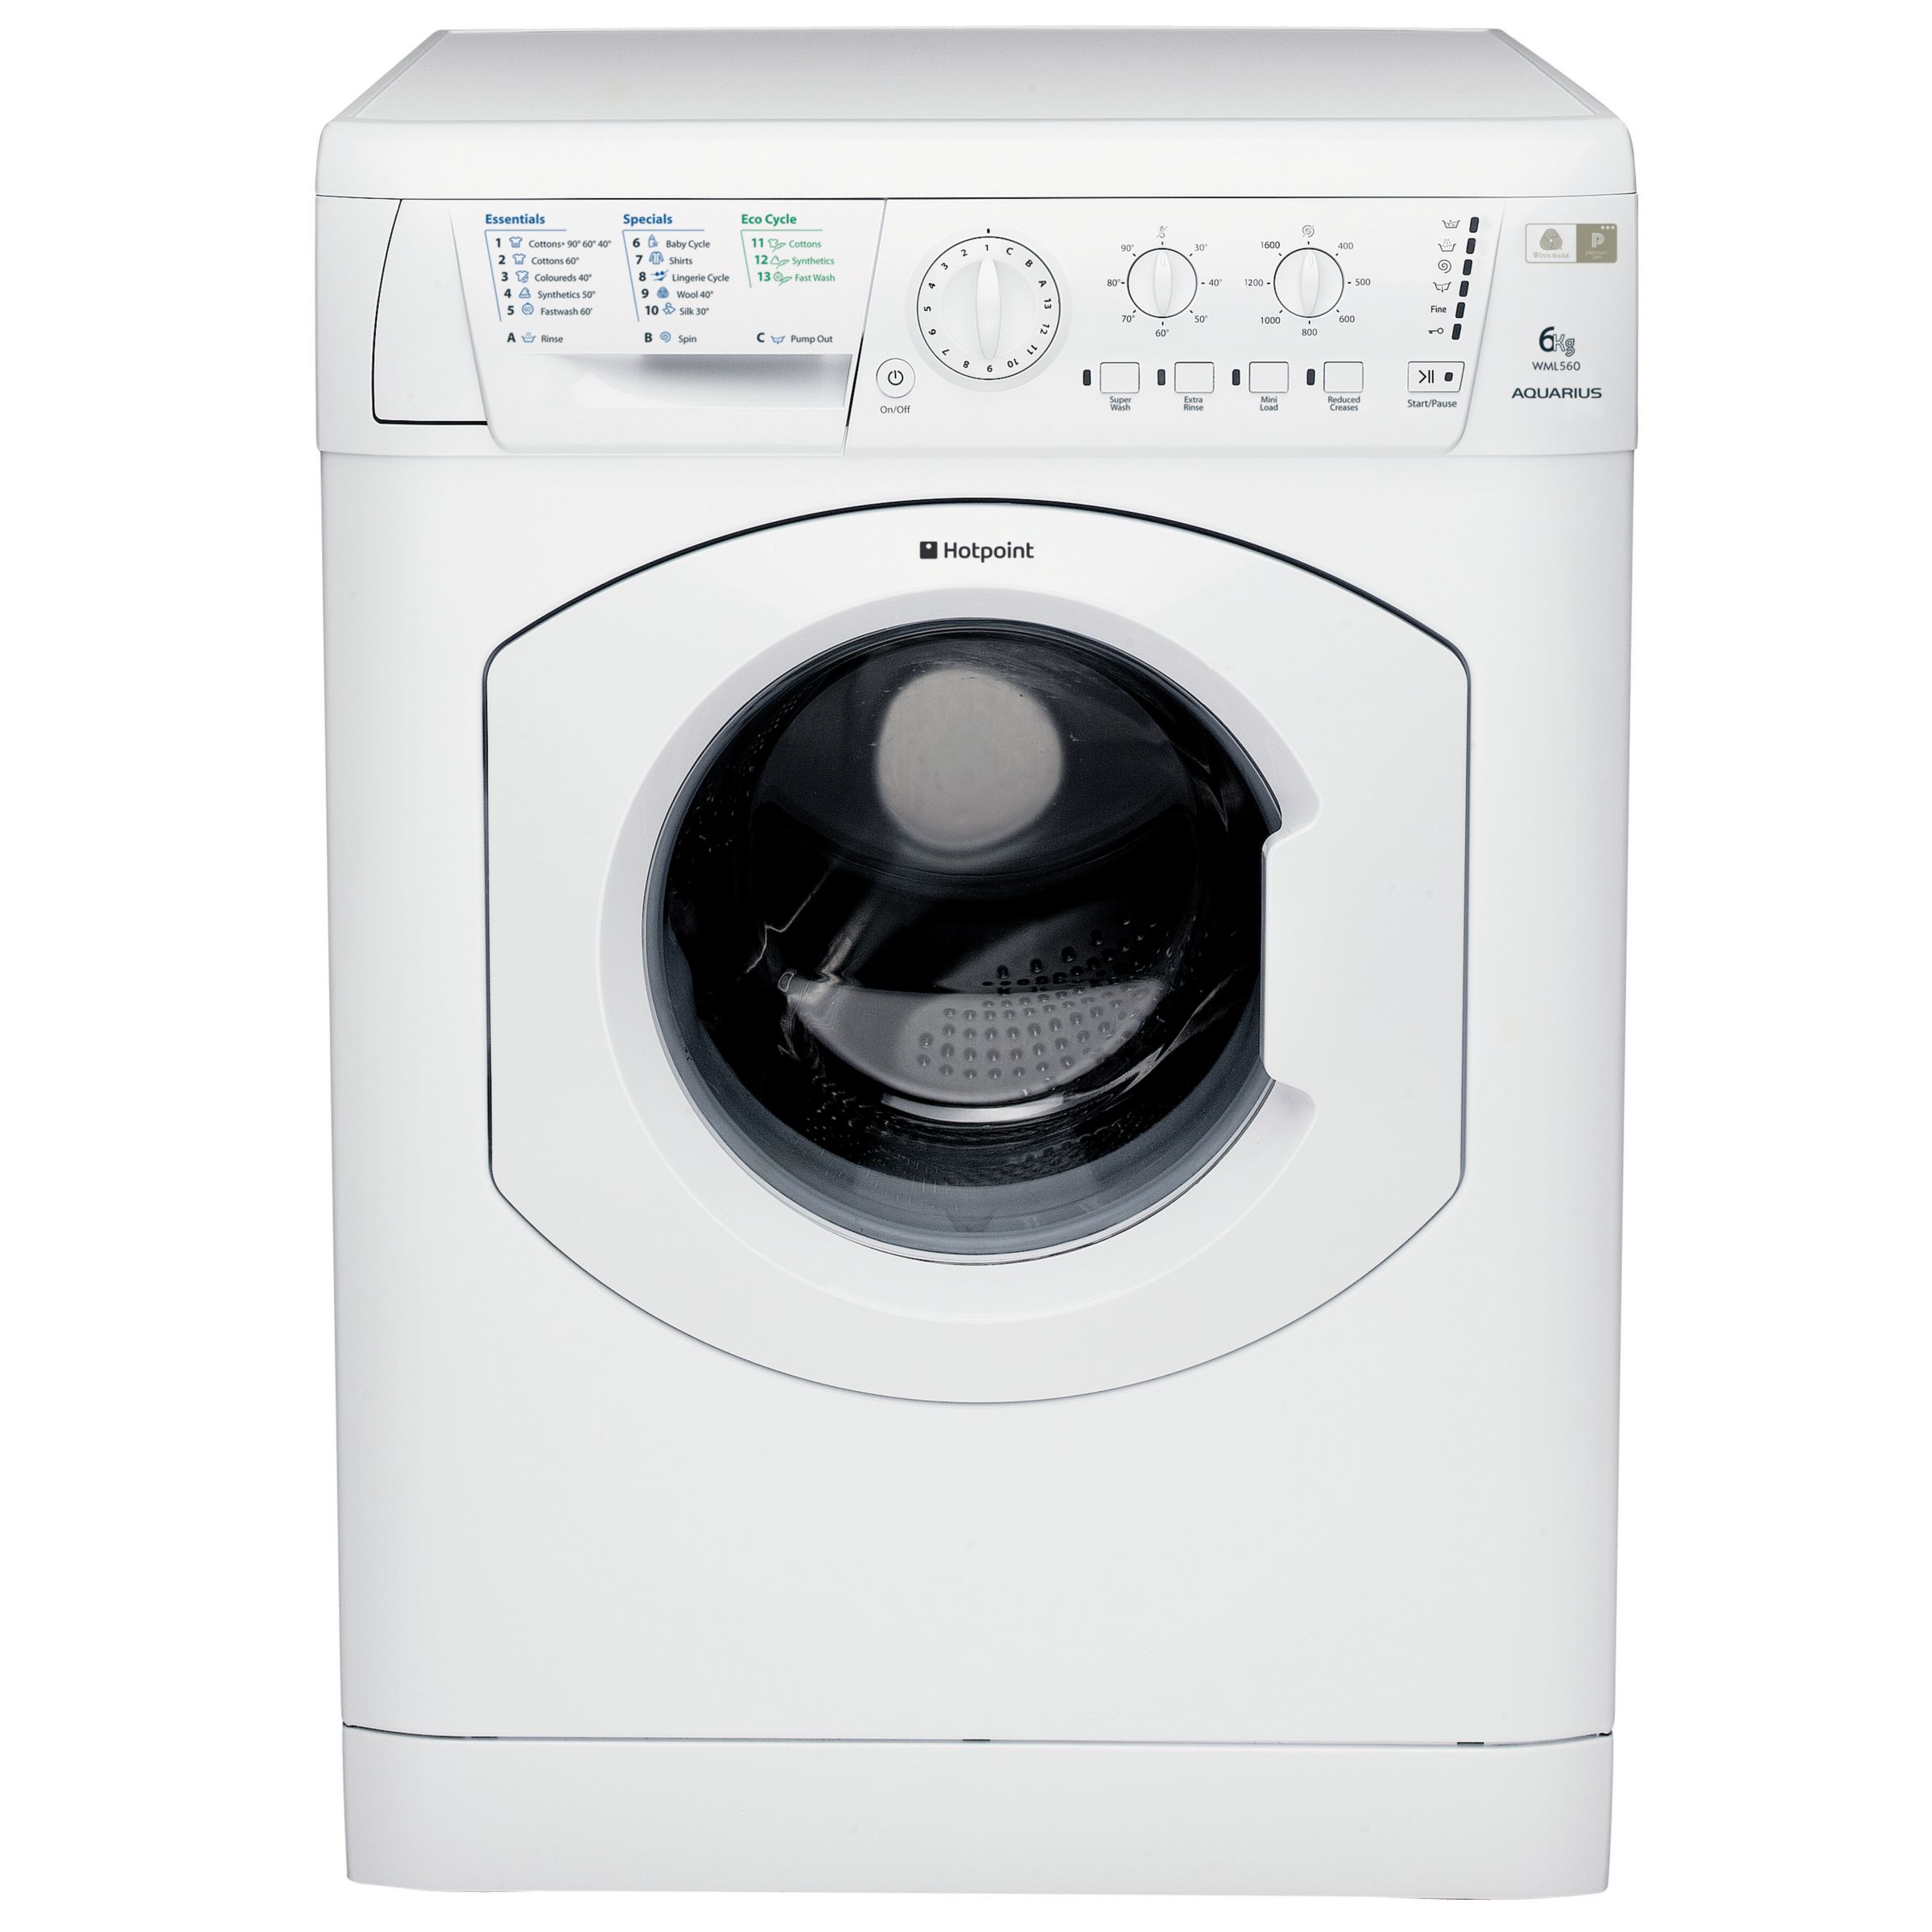 Hotpoint WML560P Washing Machine, White at John Lewis